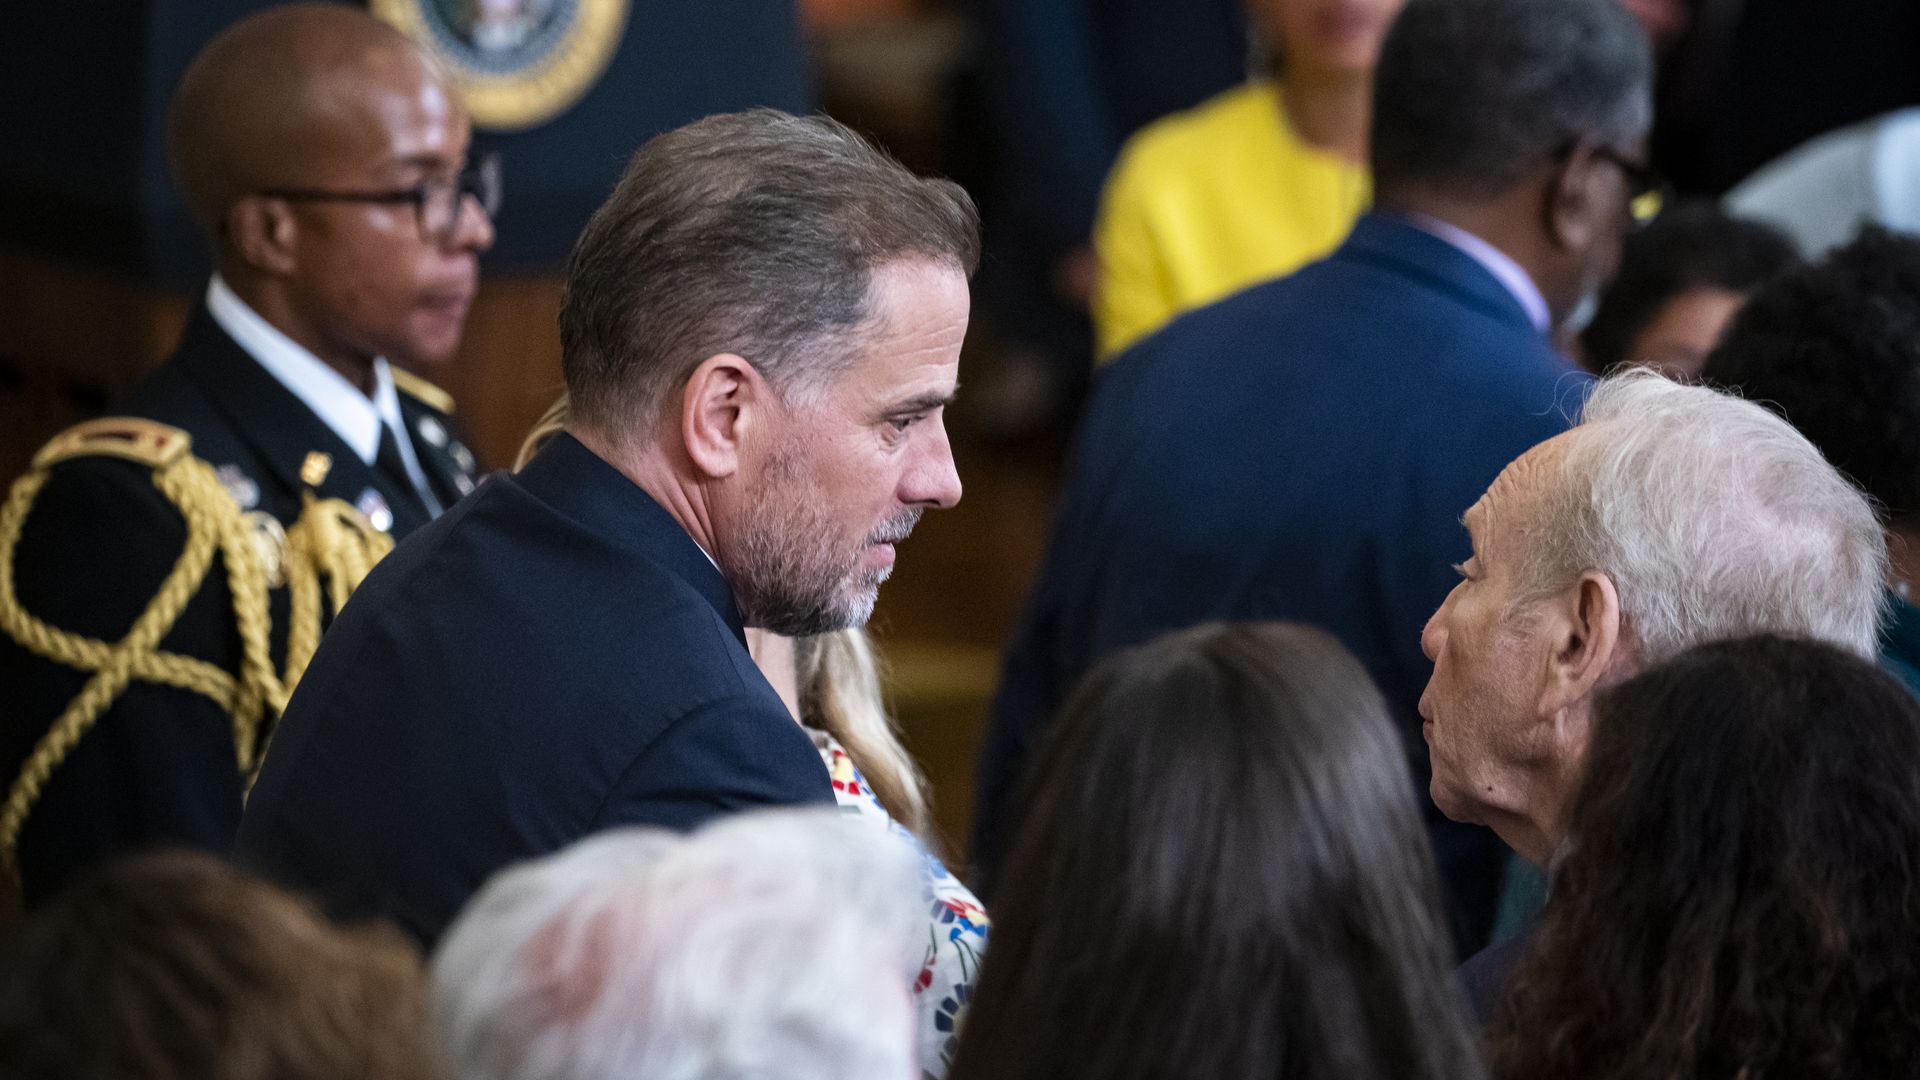 Hunter Biden, son of President Biden, speaking to former Senator Joe Lieberman during a White House ceremony in July 2022.